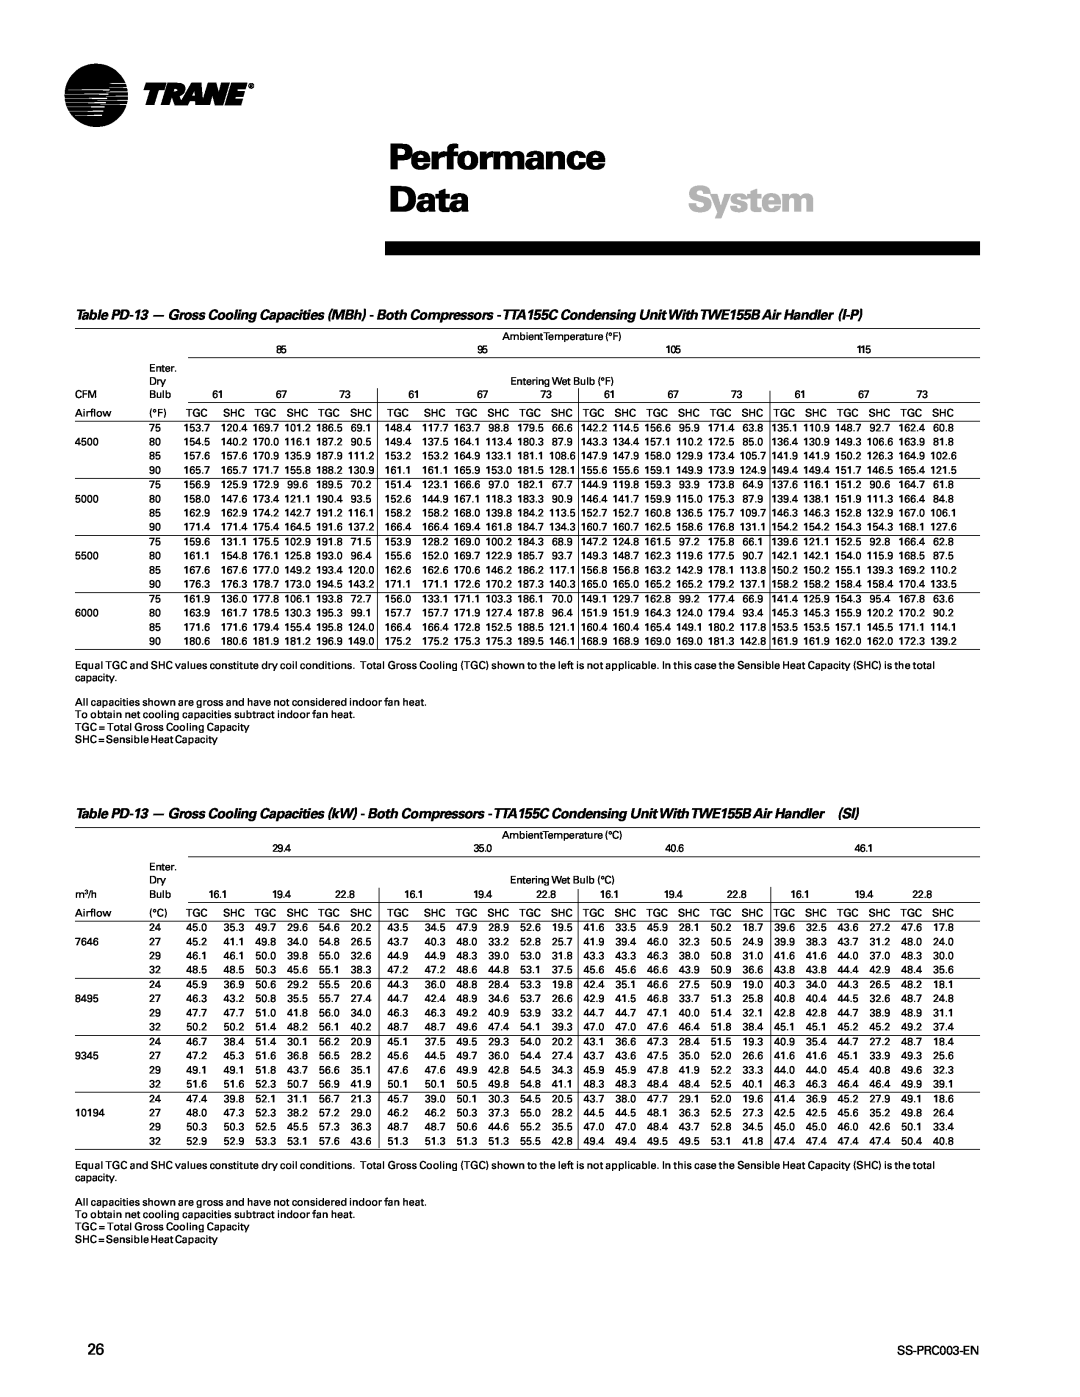 Trane SS-PRC003-EN manual Performance, DataSystem 